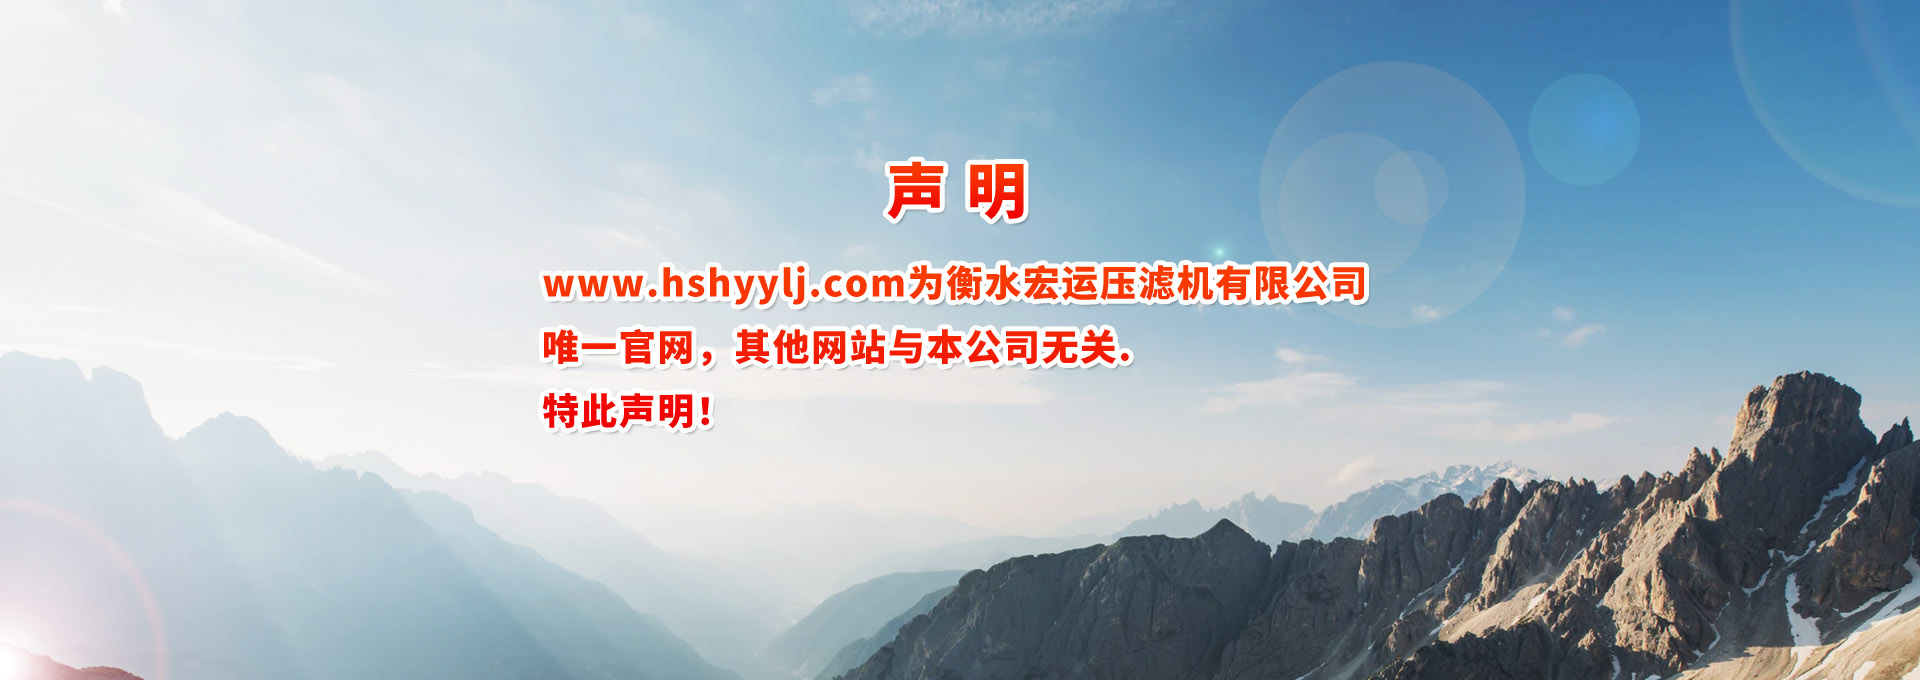 www.hshyylj.com为衡水宏运压滤机有限公司唯一官网，其他网站与本公司无关，特此声明！